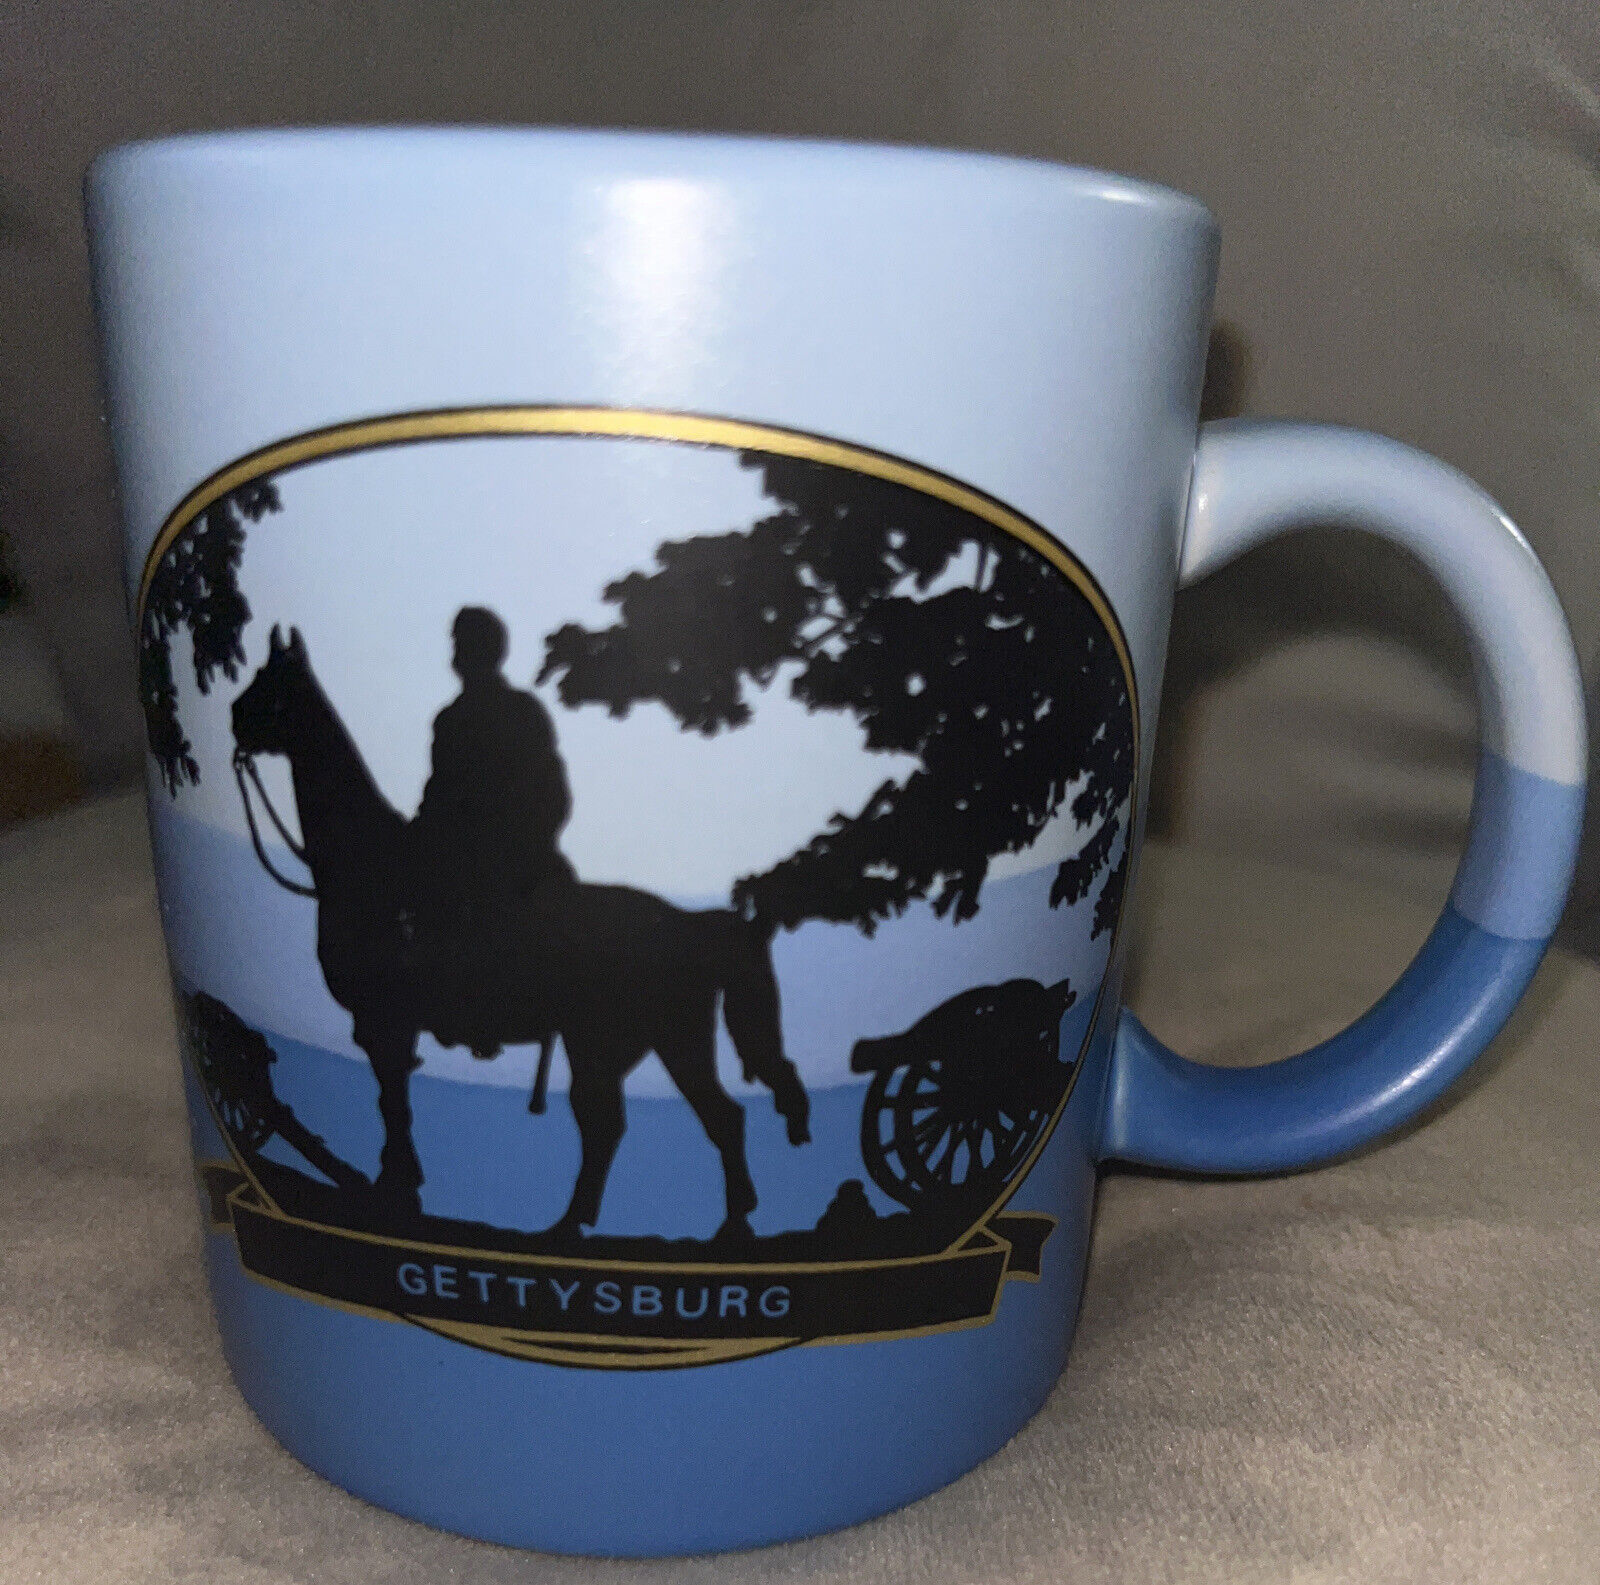 Gettysburg National Military Ceramic Coffee Mug Cup